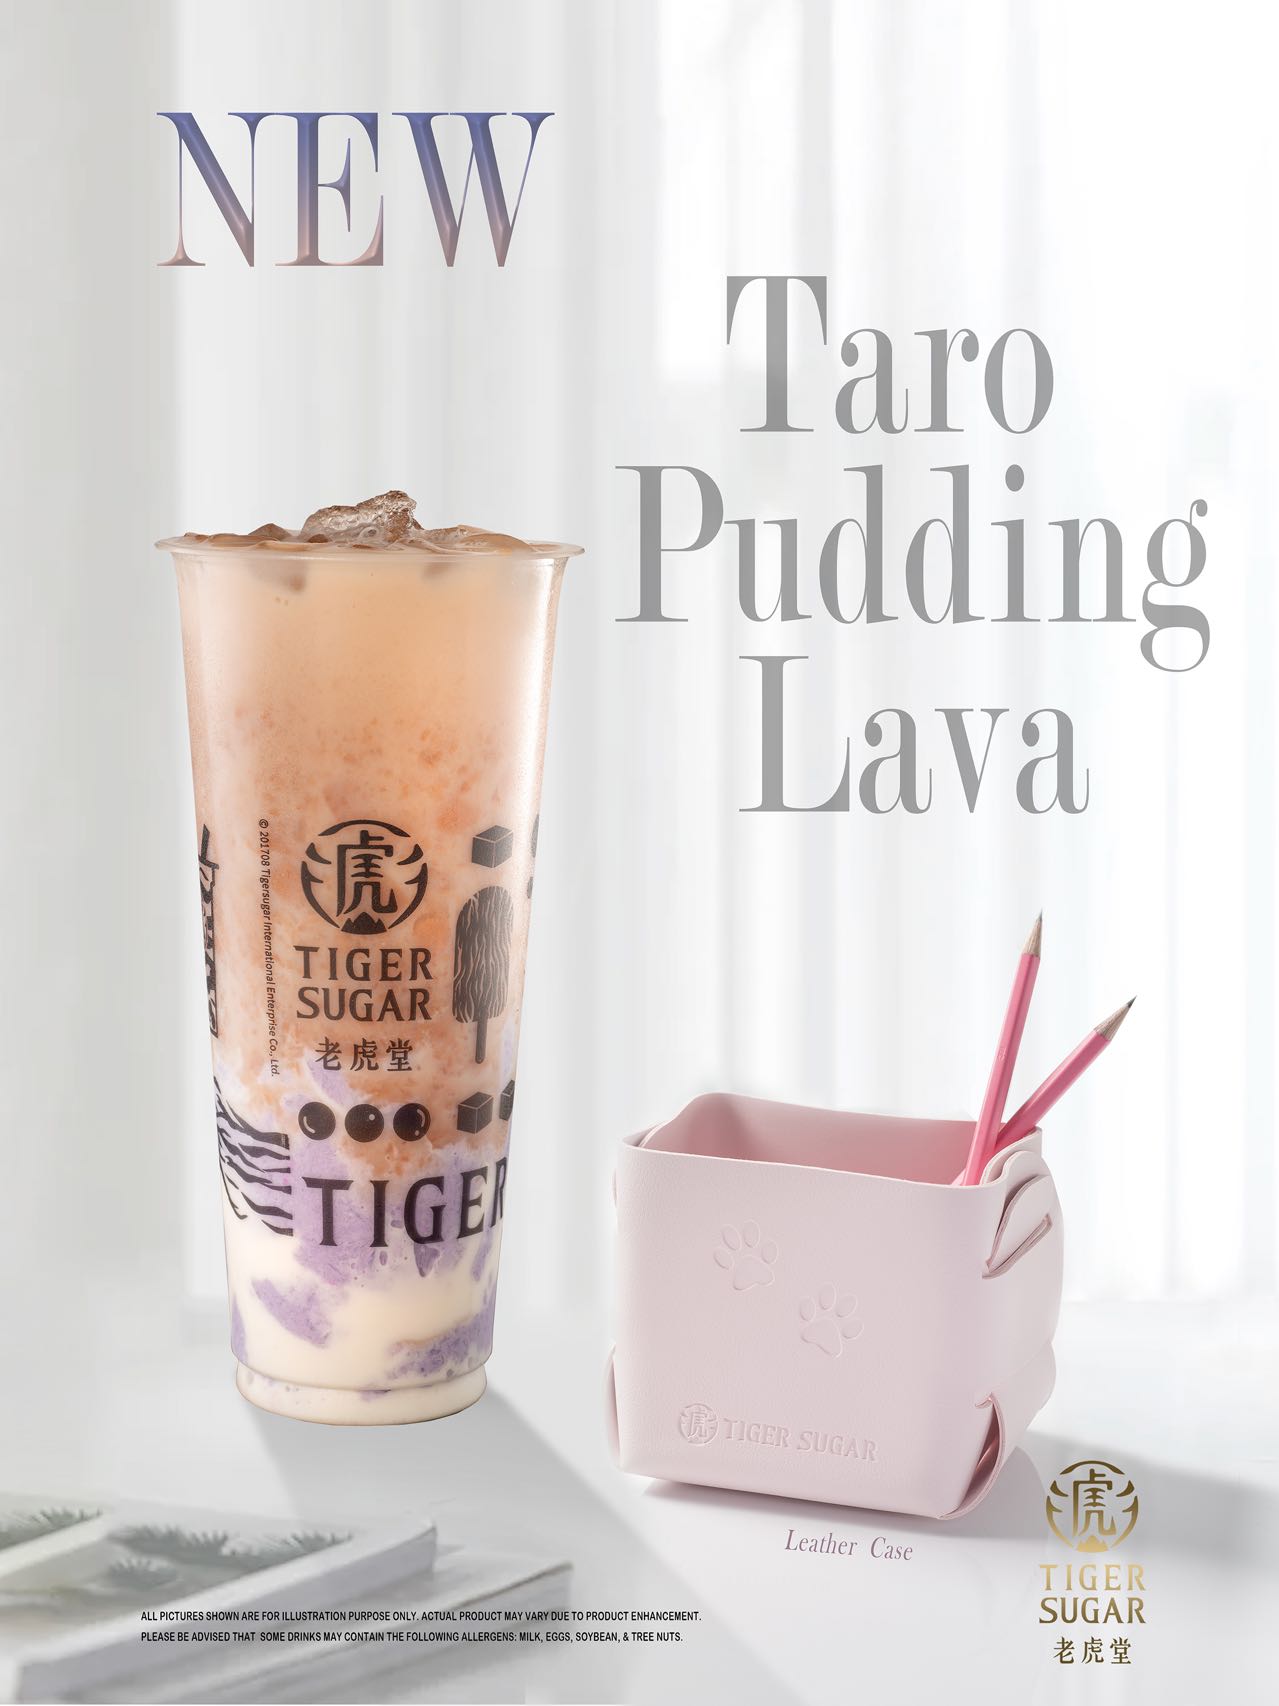 Tiger Sugar Taro Pudding